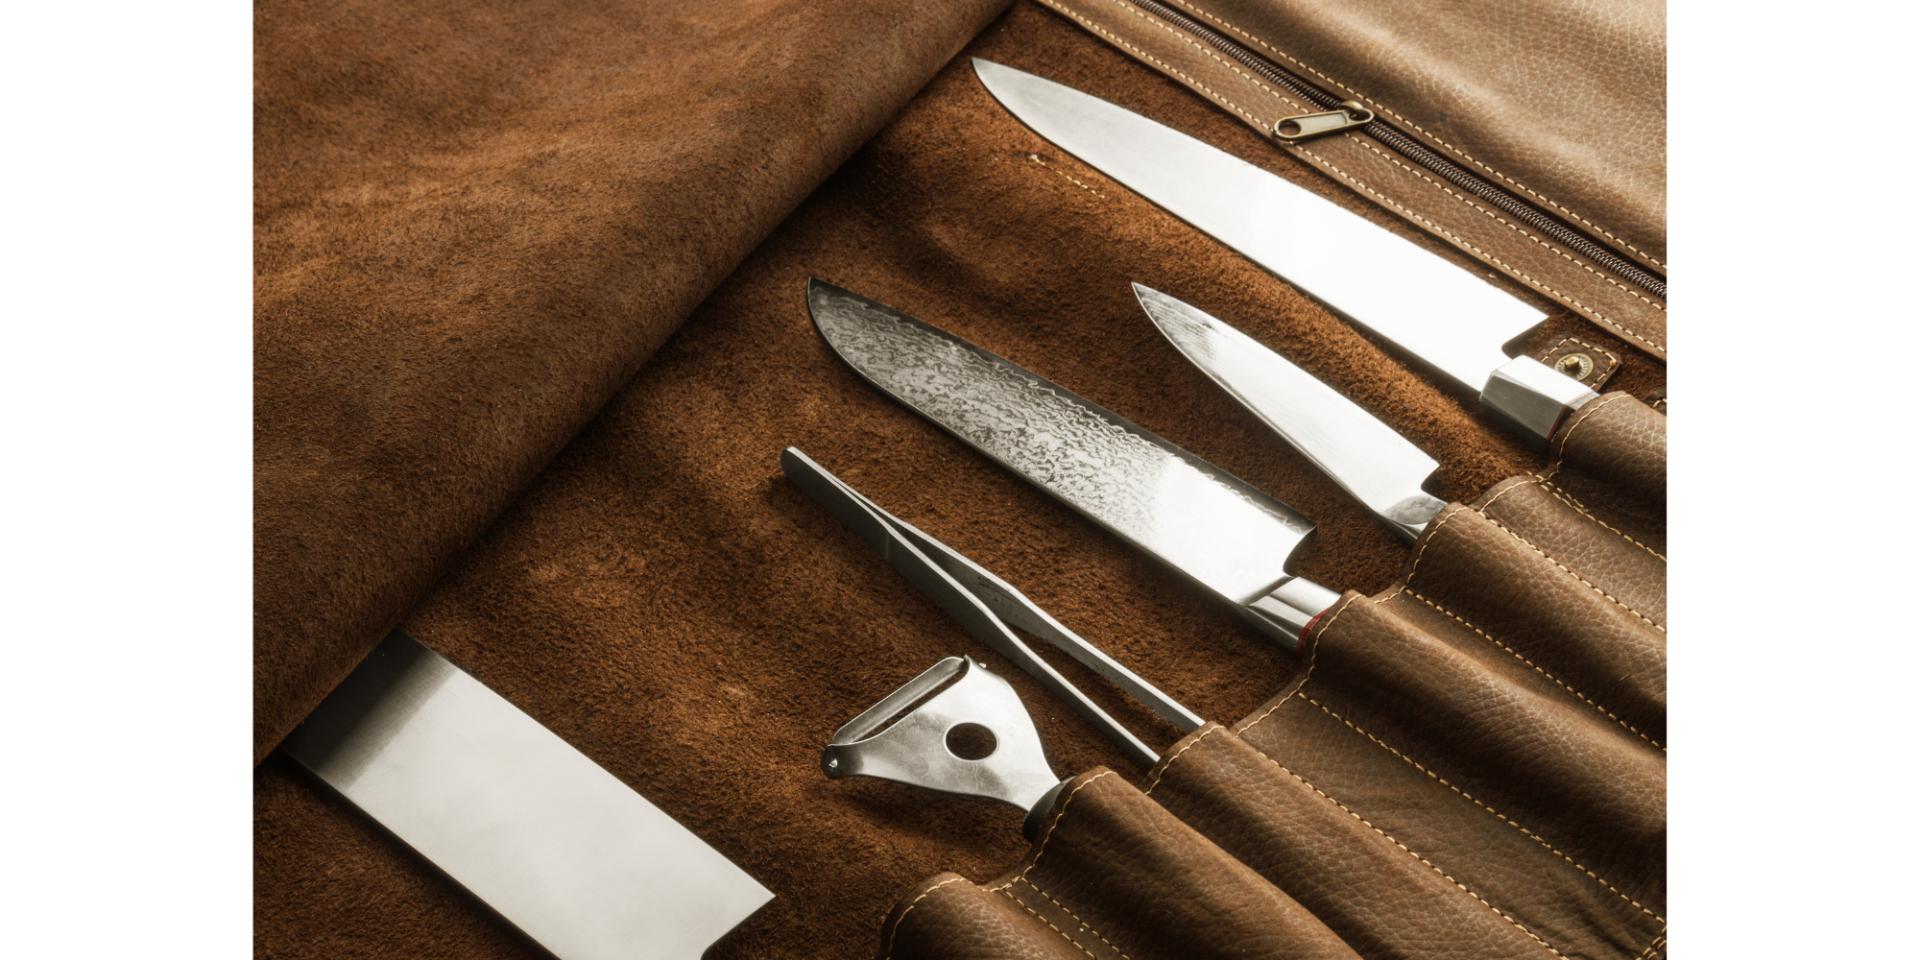  set of professional kitchen knives